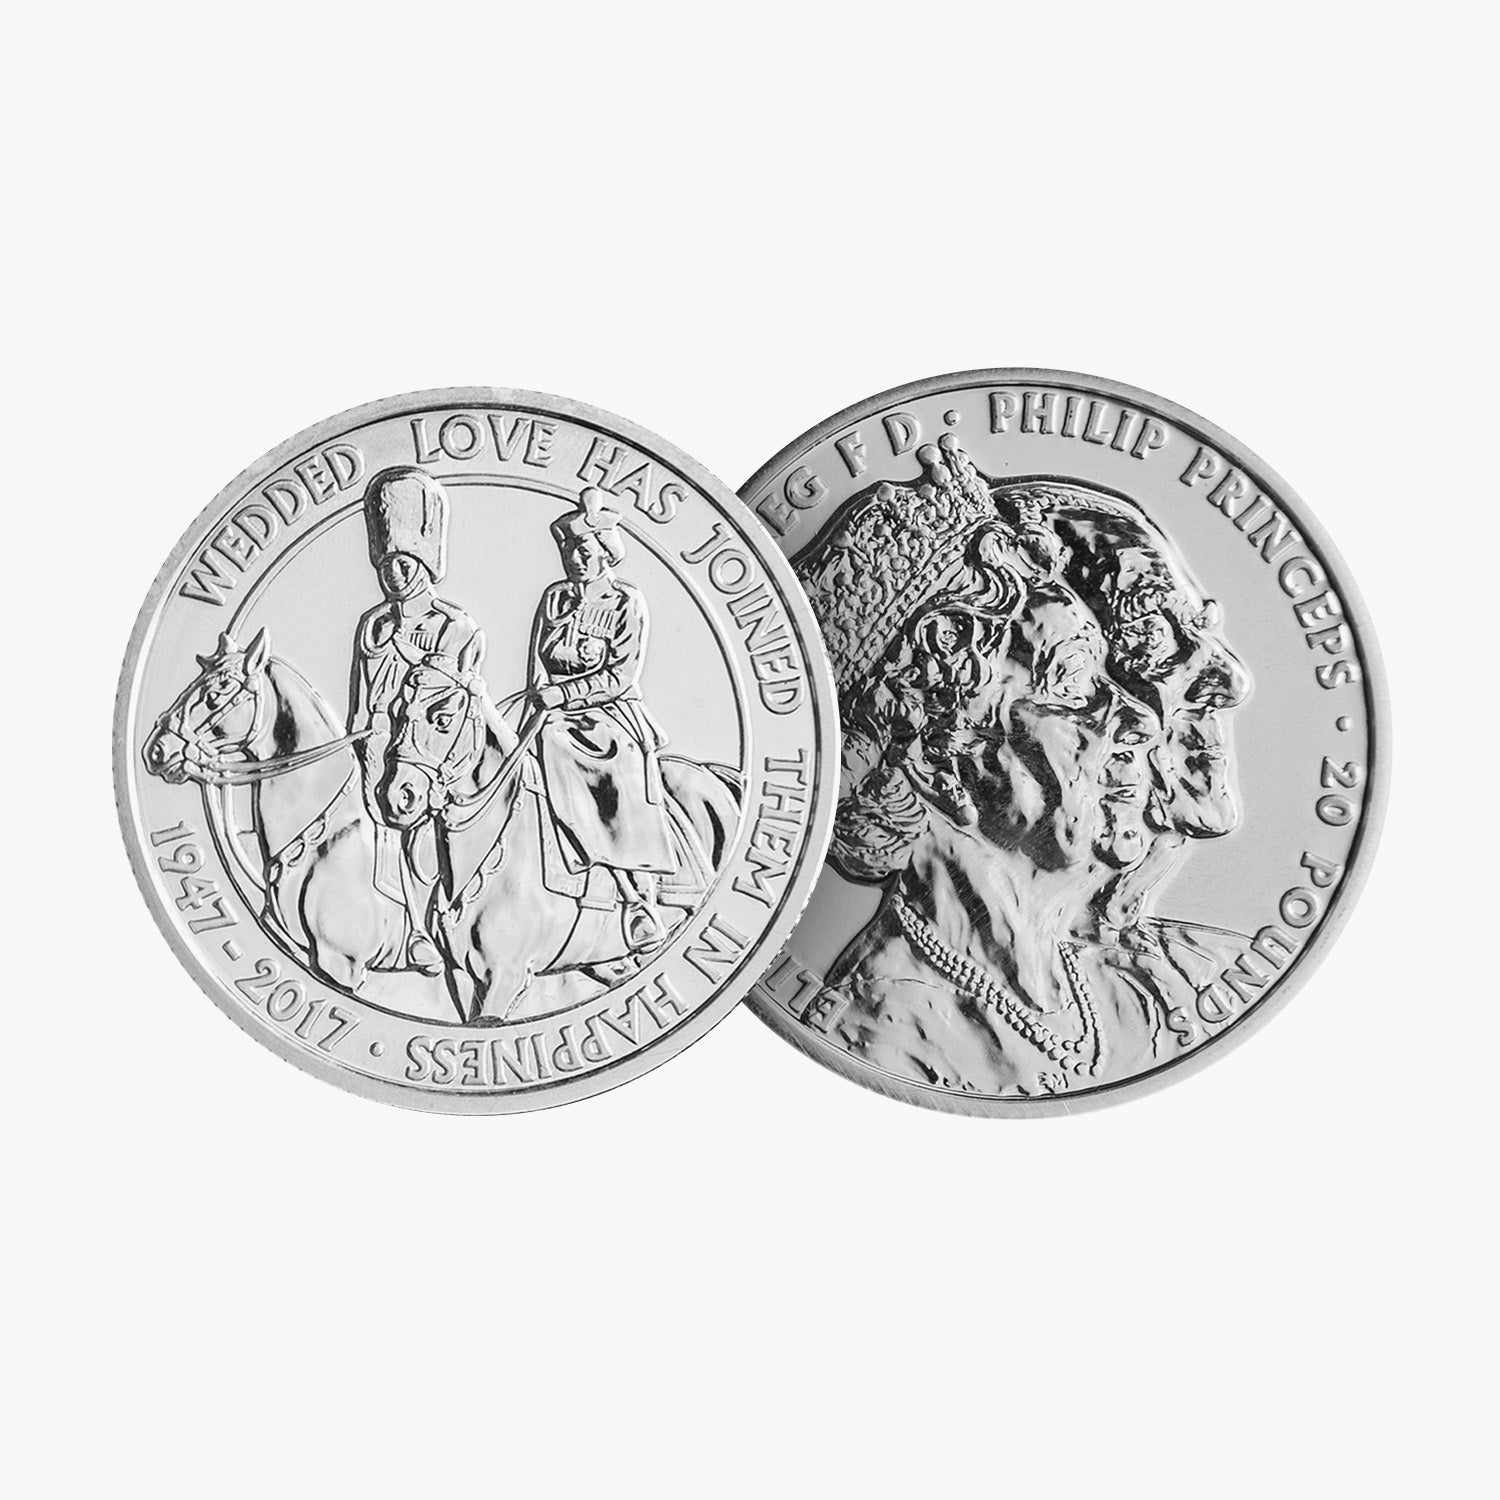 The Platinum Wedding 2017 UK £20 Fine Silver Coin